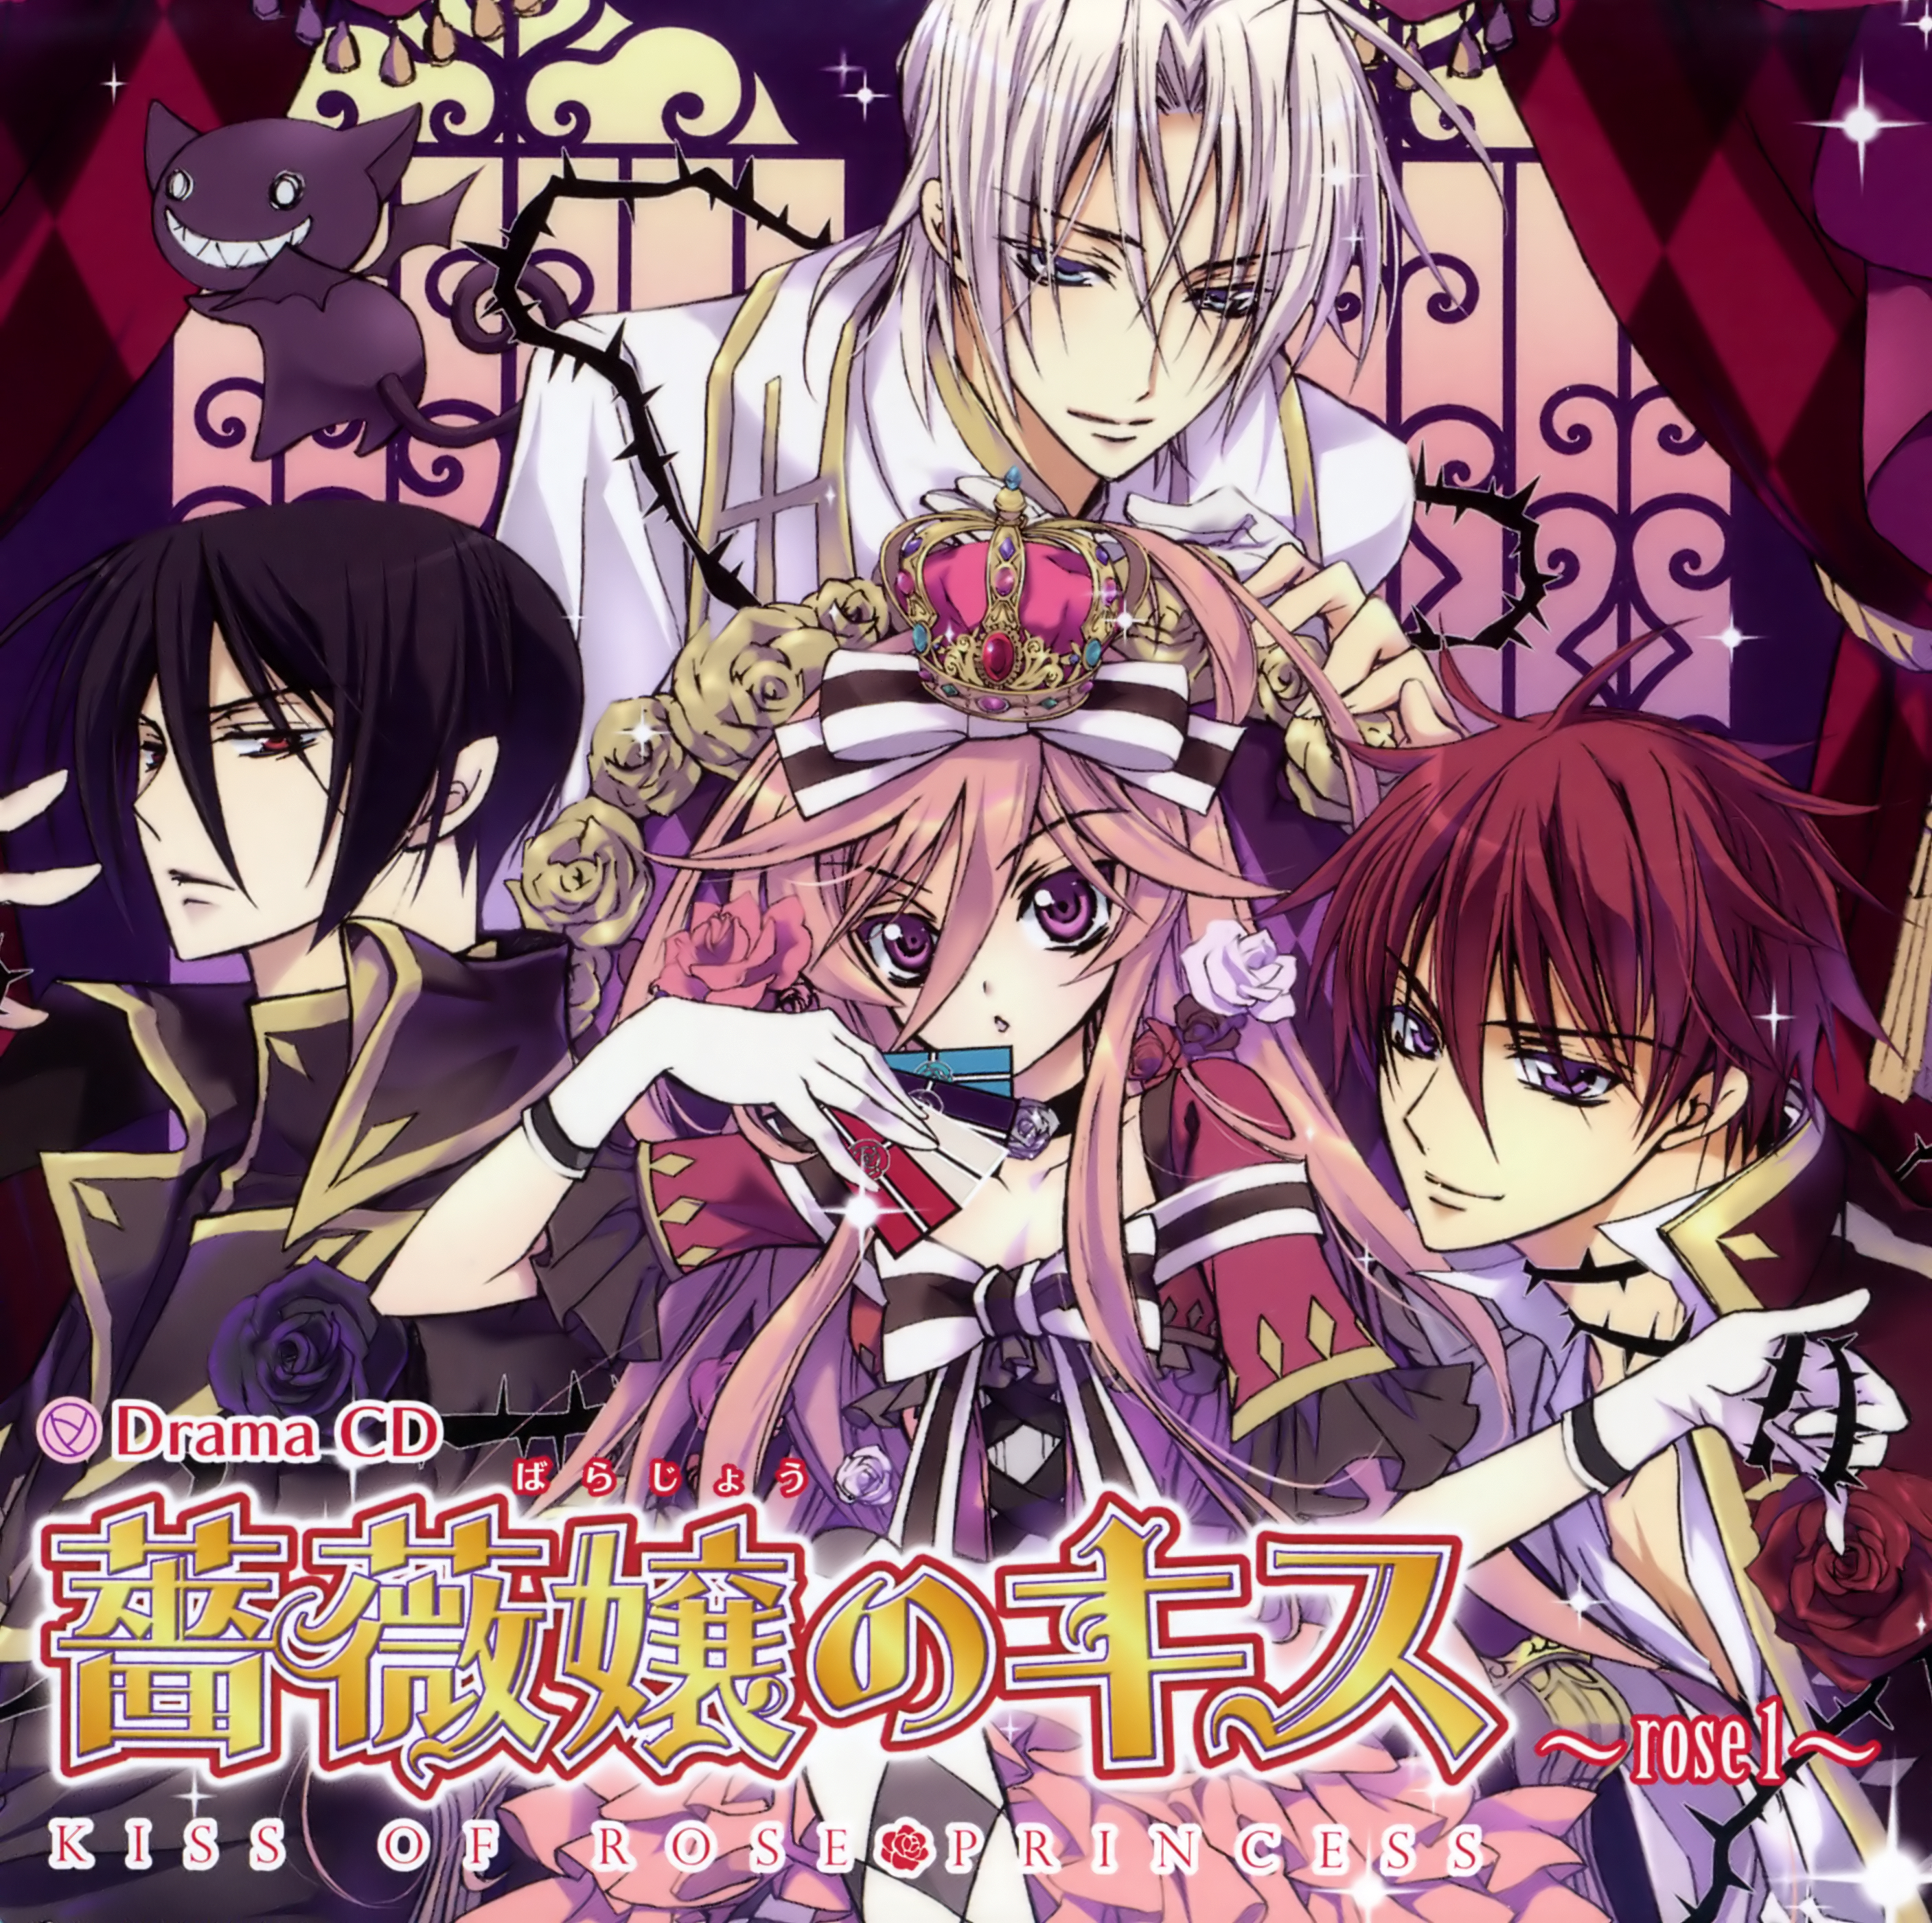 Aya Shouoto, Kiss Of Rose Princess, Mutsuki Kurama, - Titles Of Vampire  Anime - 2814x2801 Wallpaper 